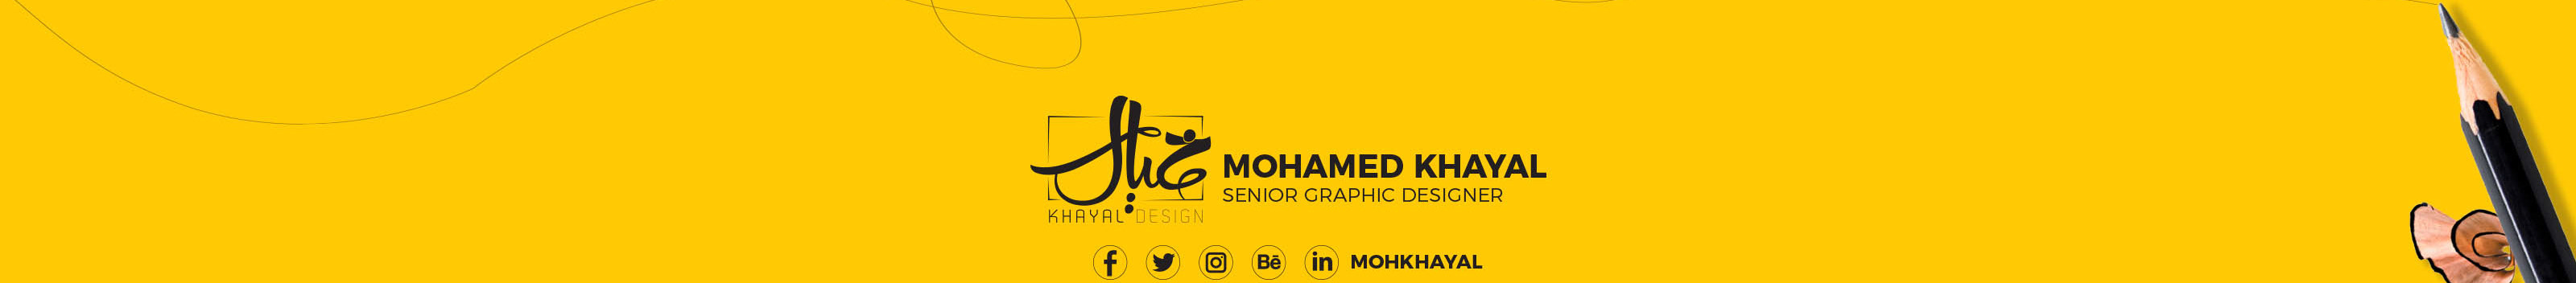 Mohamed khayal's profile banner